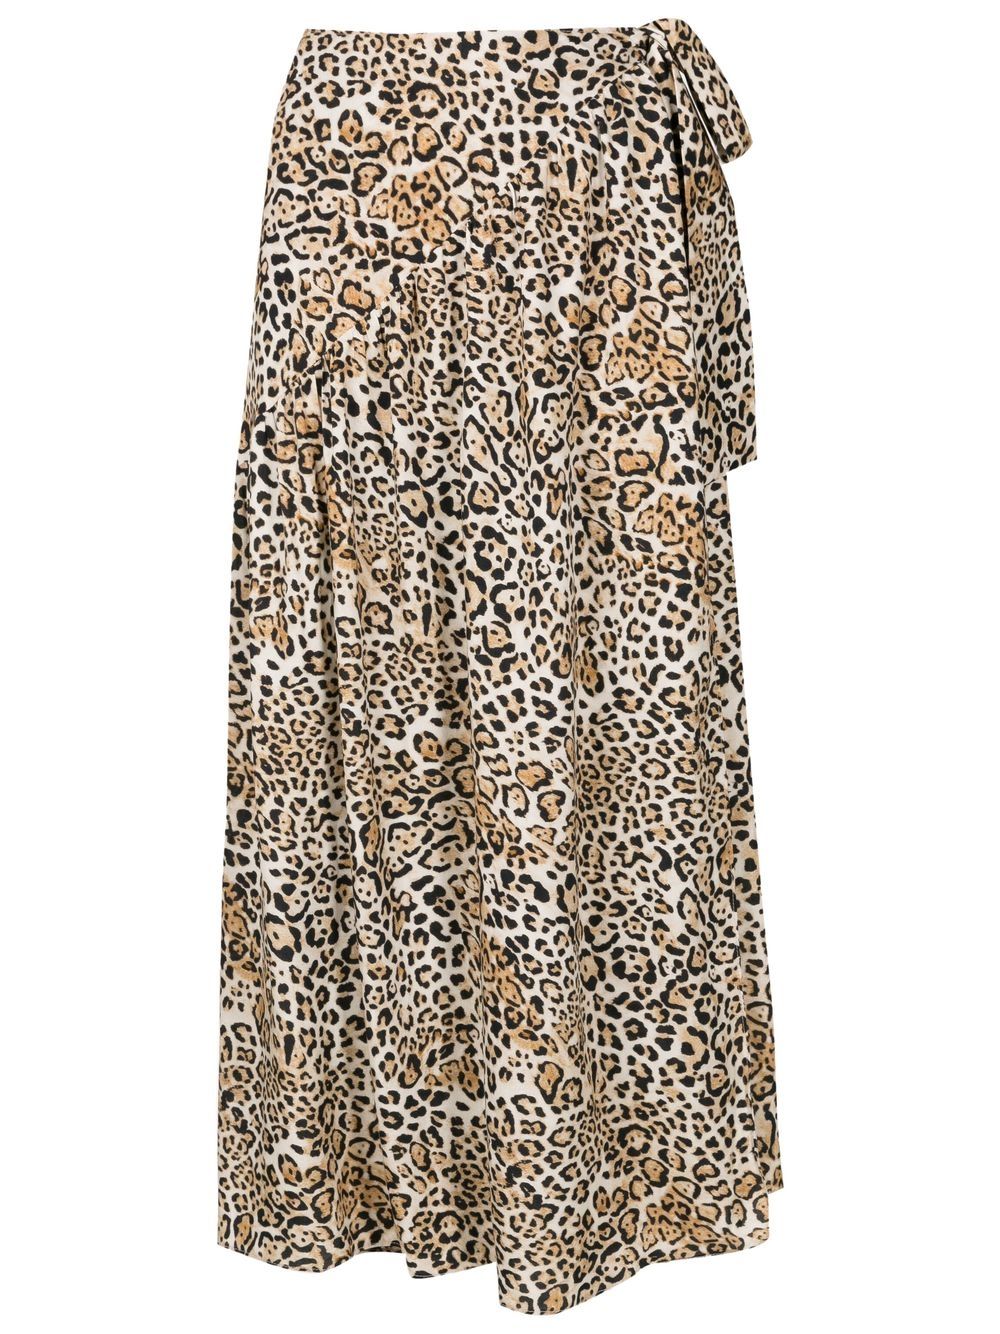 Leopard Pareo Midi Skirt